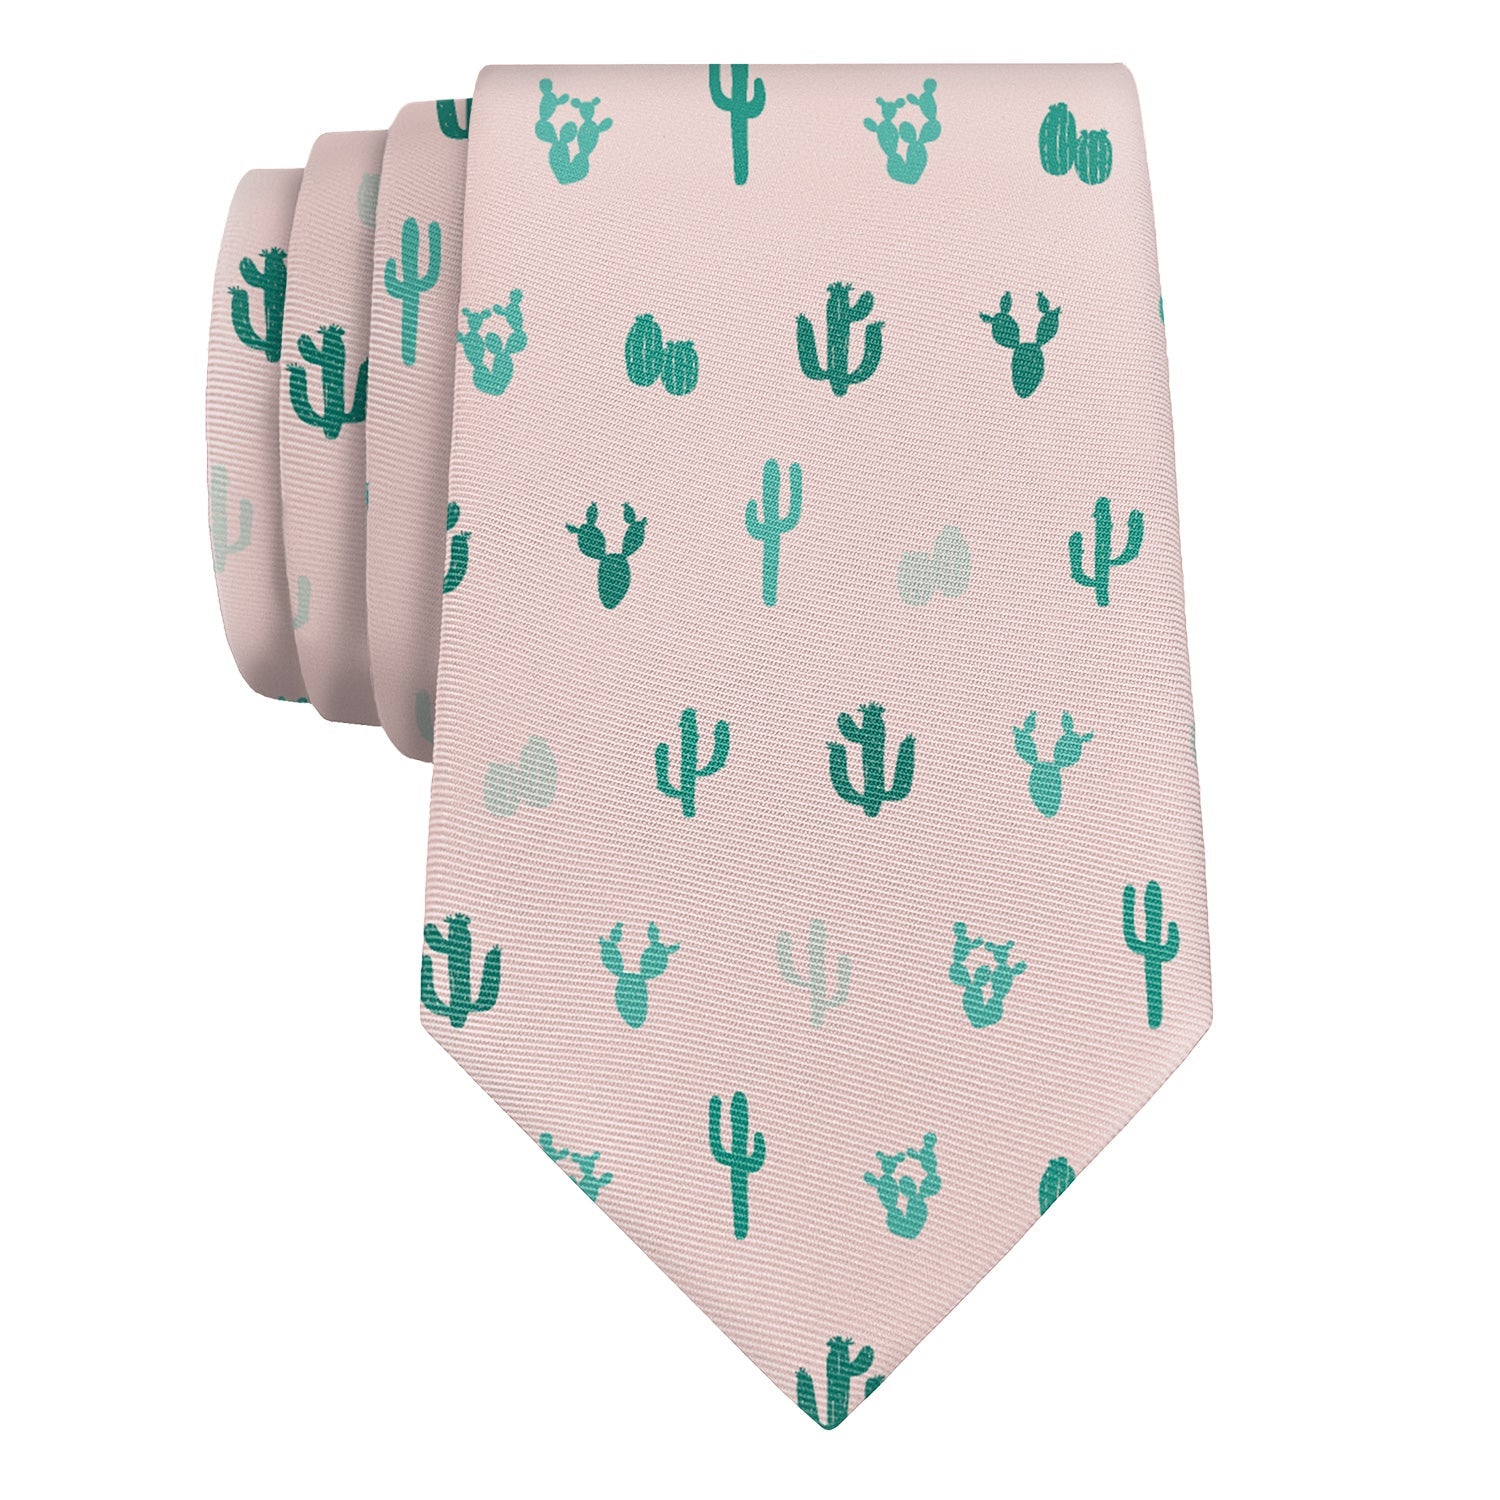 Cactus Herbage Necktie - Rolled - Knotty Tie Co.